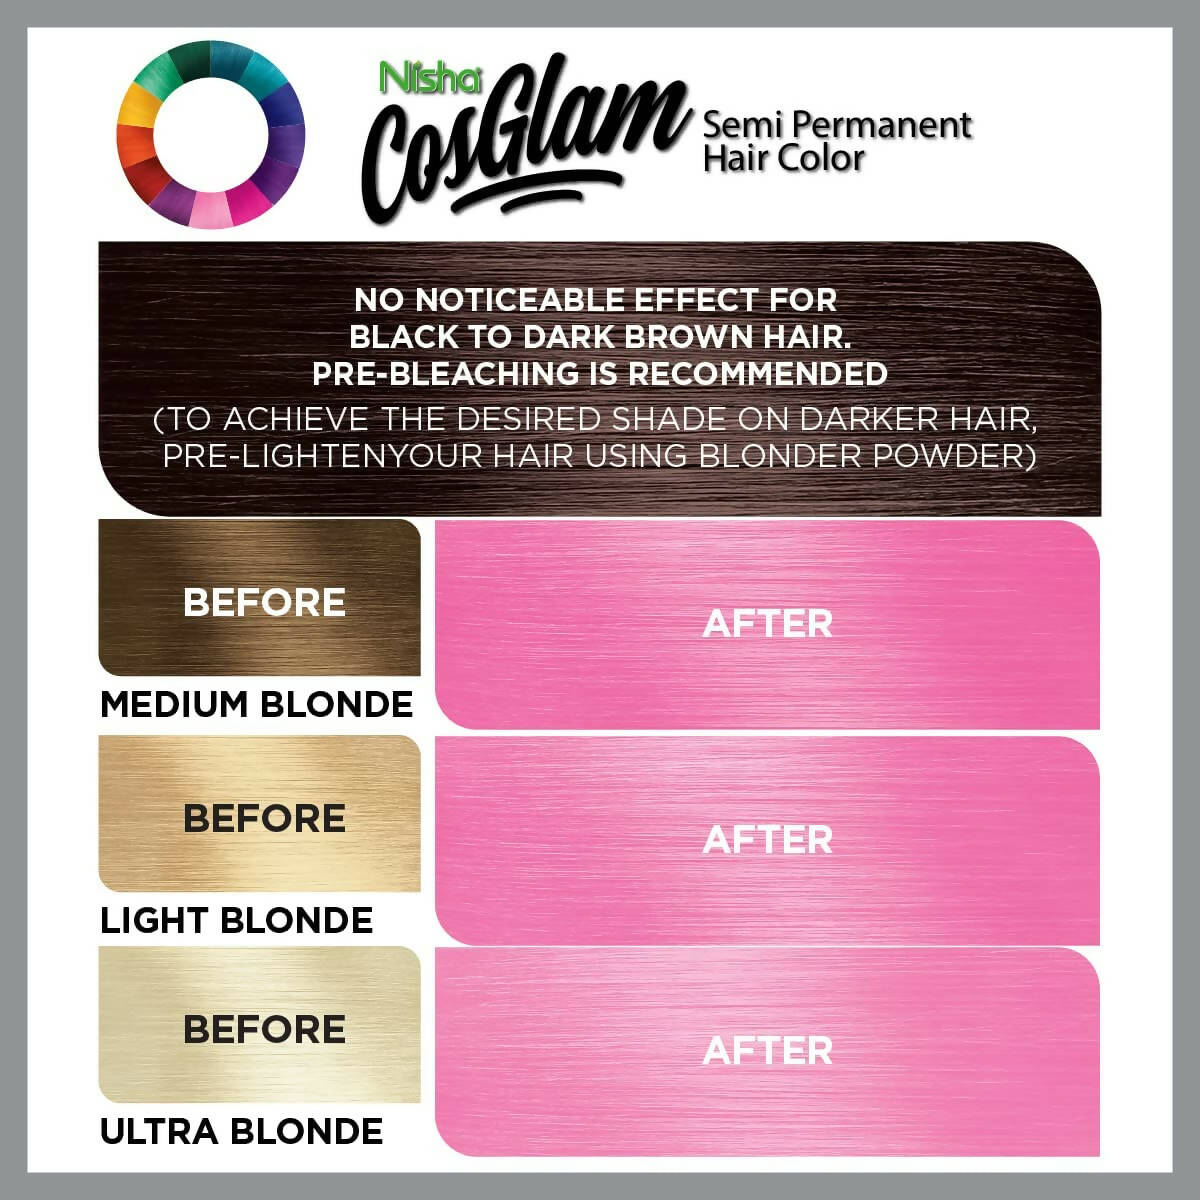 Nisha Cosglam Semi Permanent Hair Color 11 Soft Pink